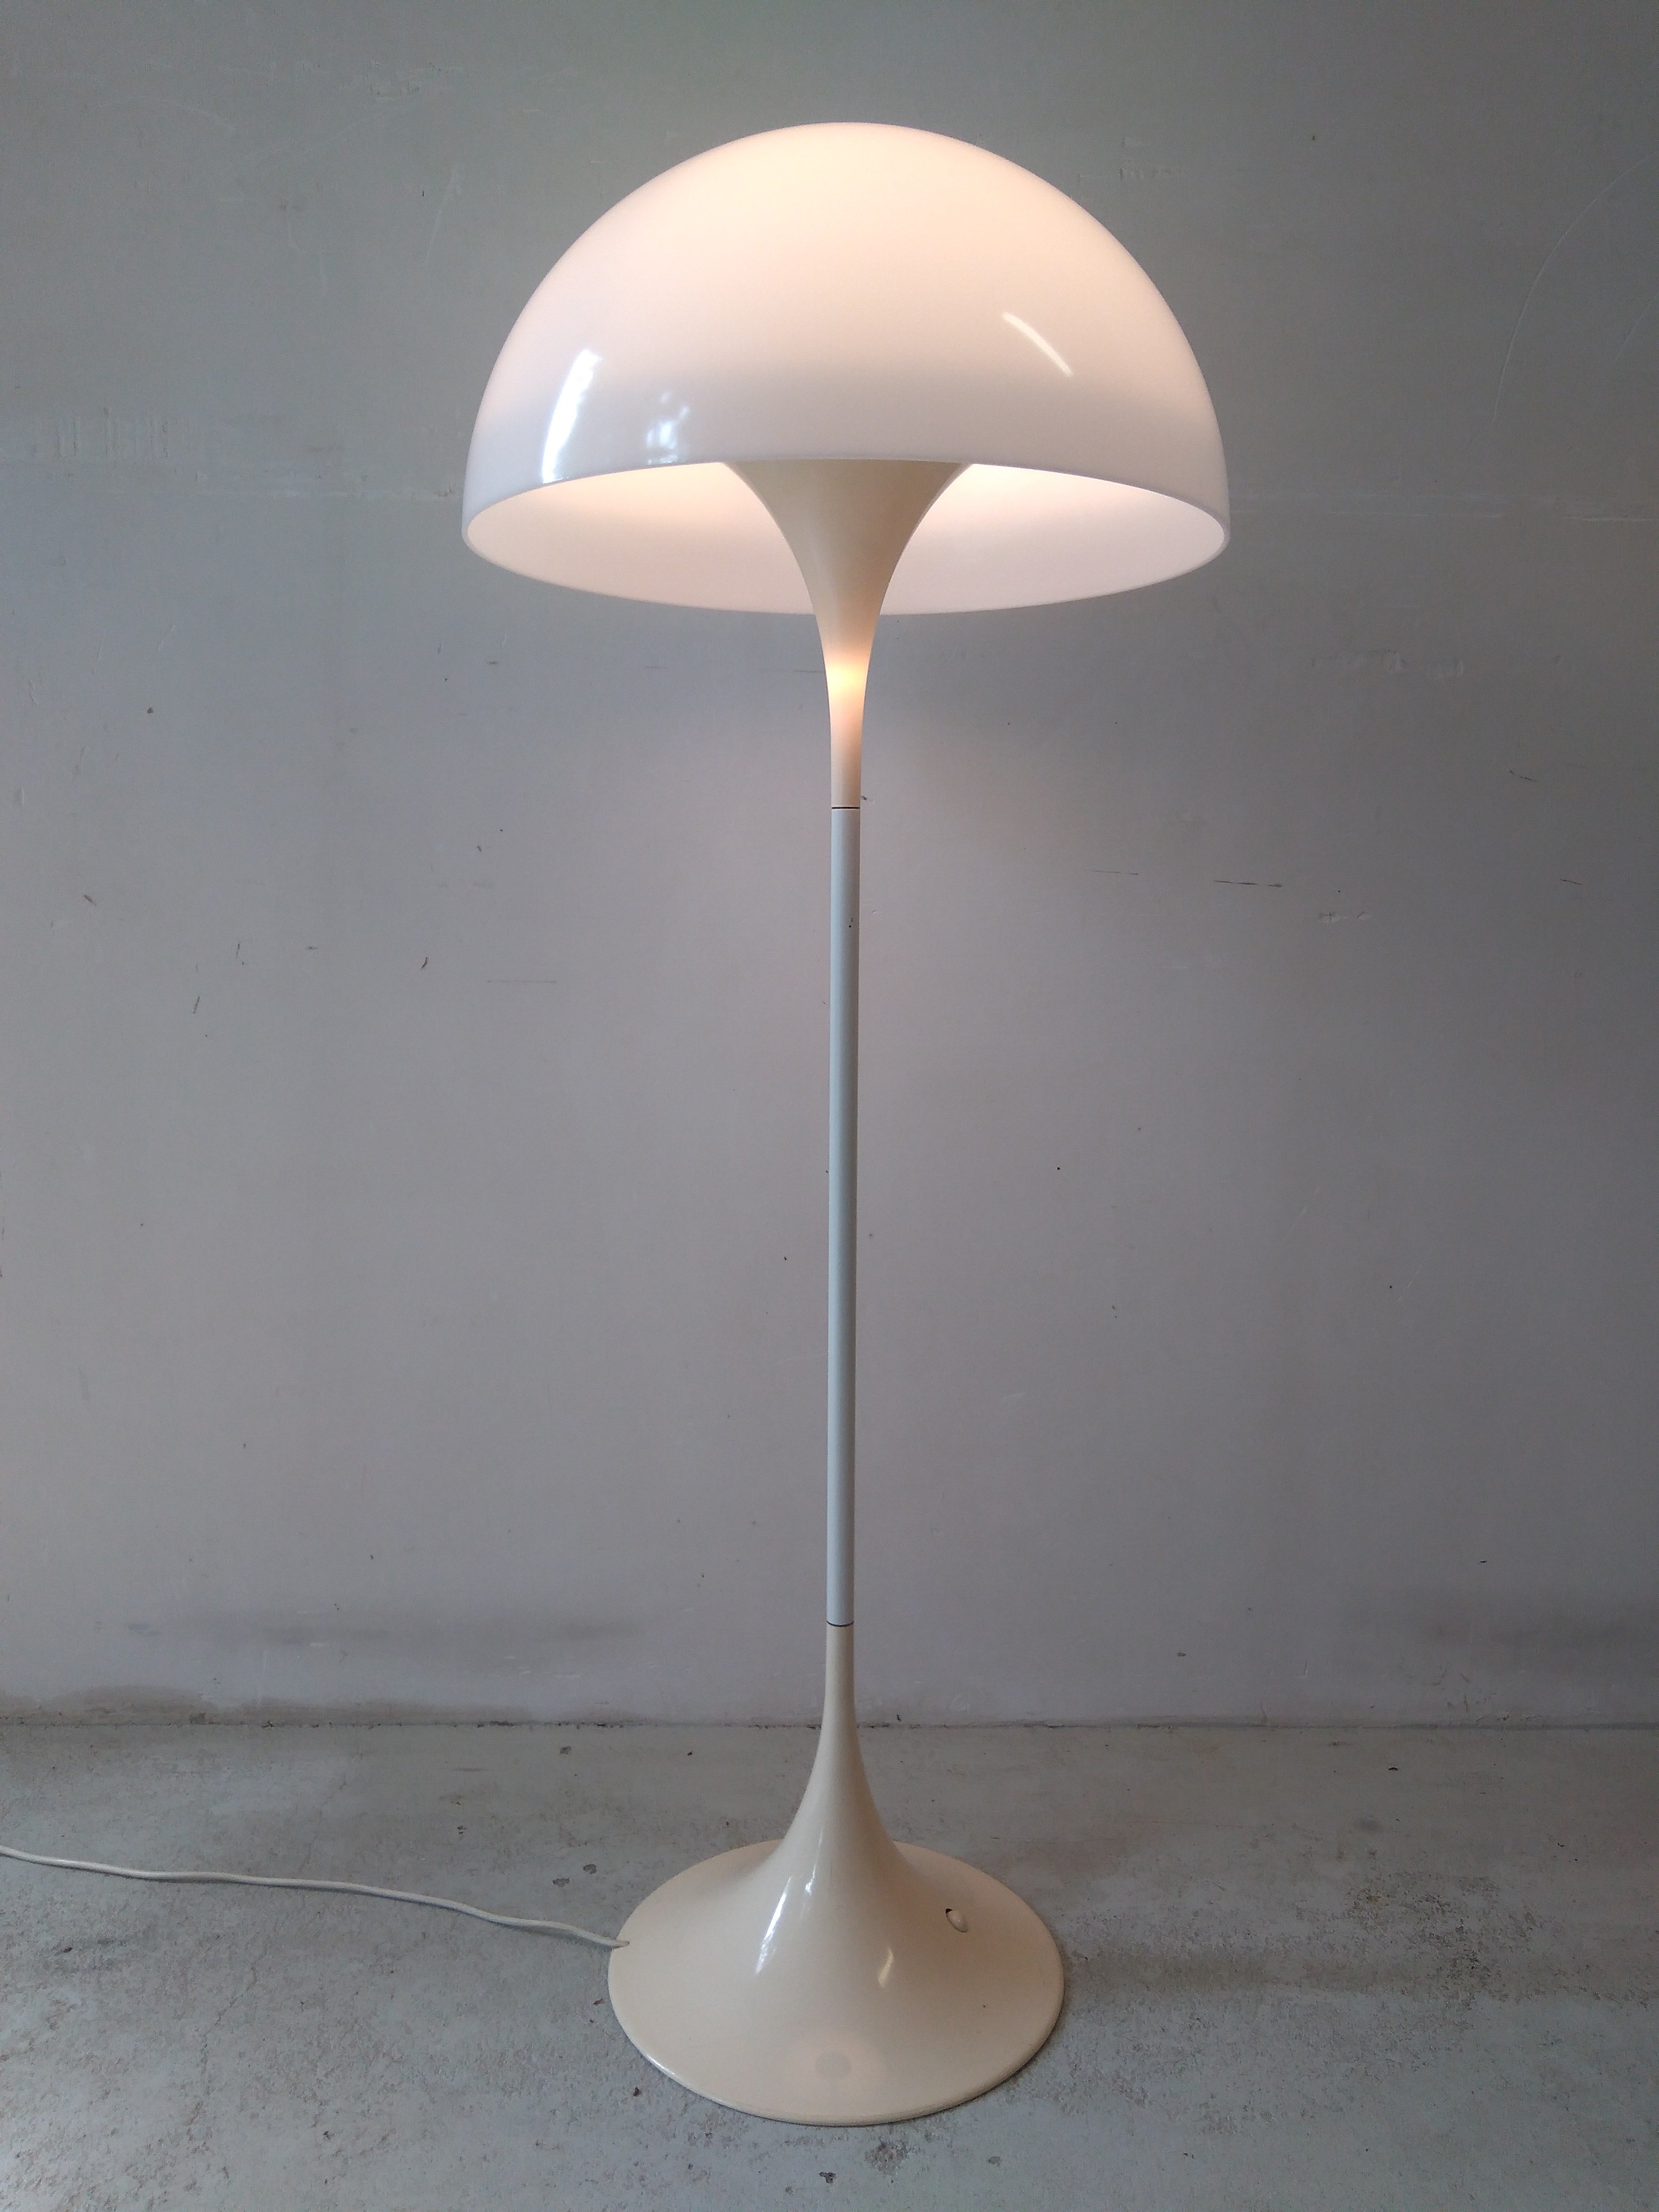 Dijk knijpen privacy El Vinta: Mushroom floor lamp (sold) (Decoration, Lamps, Design, Vintage)